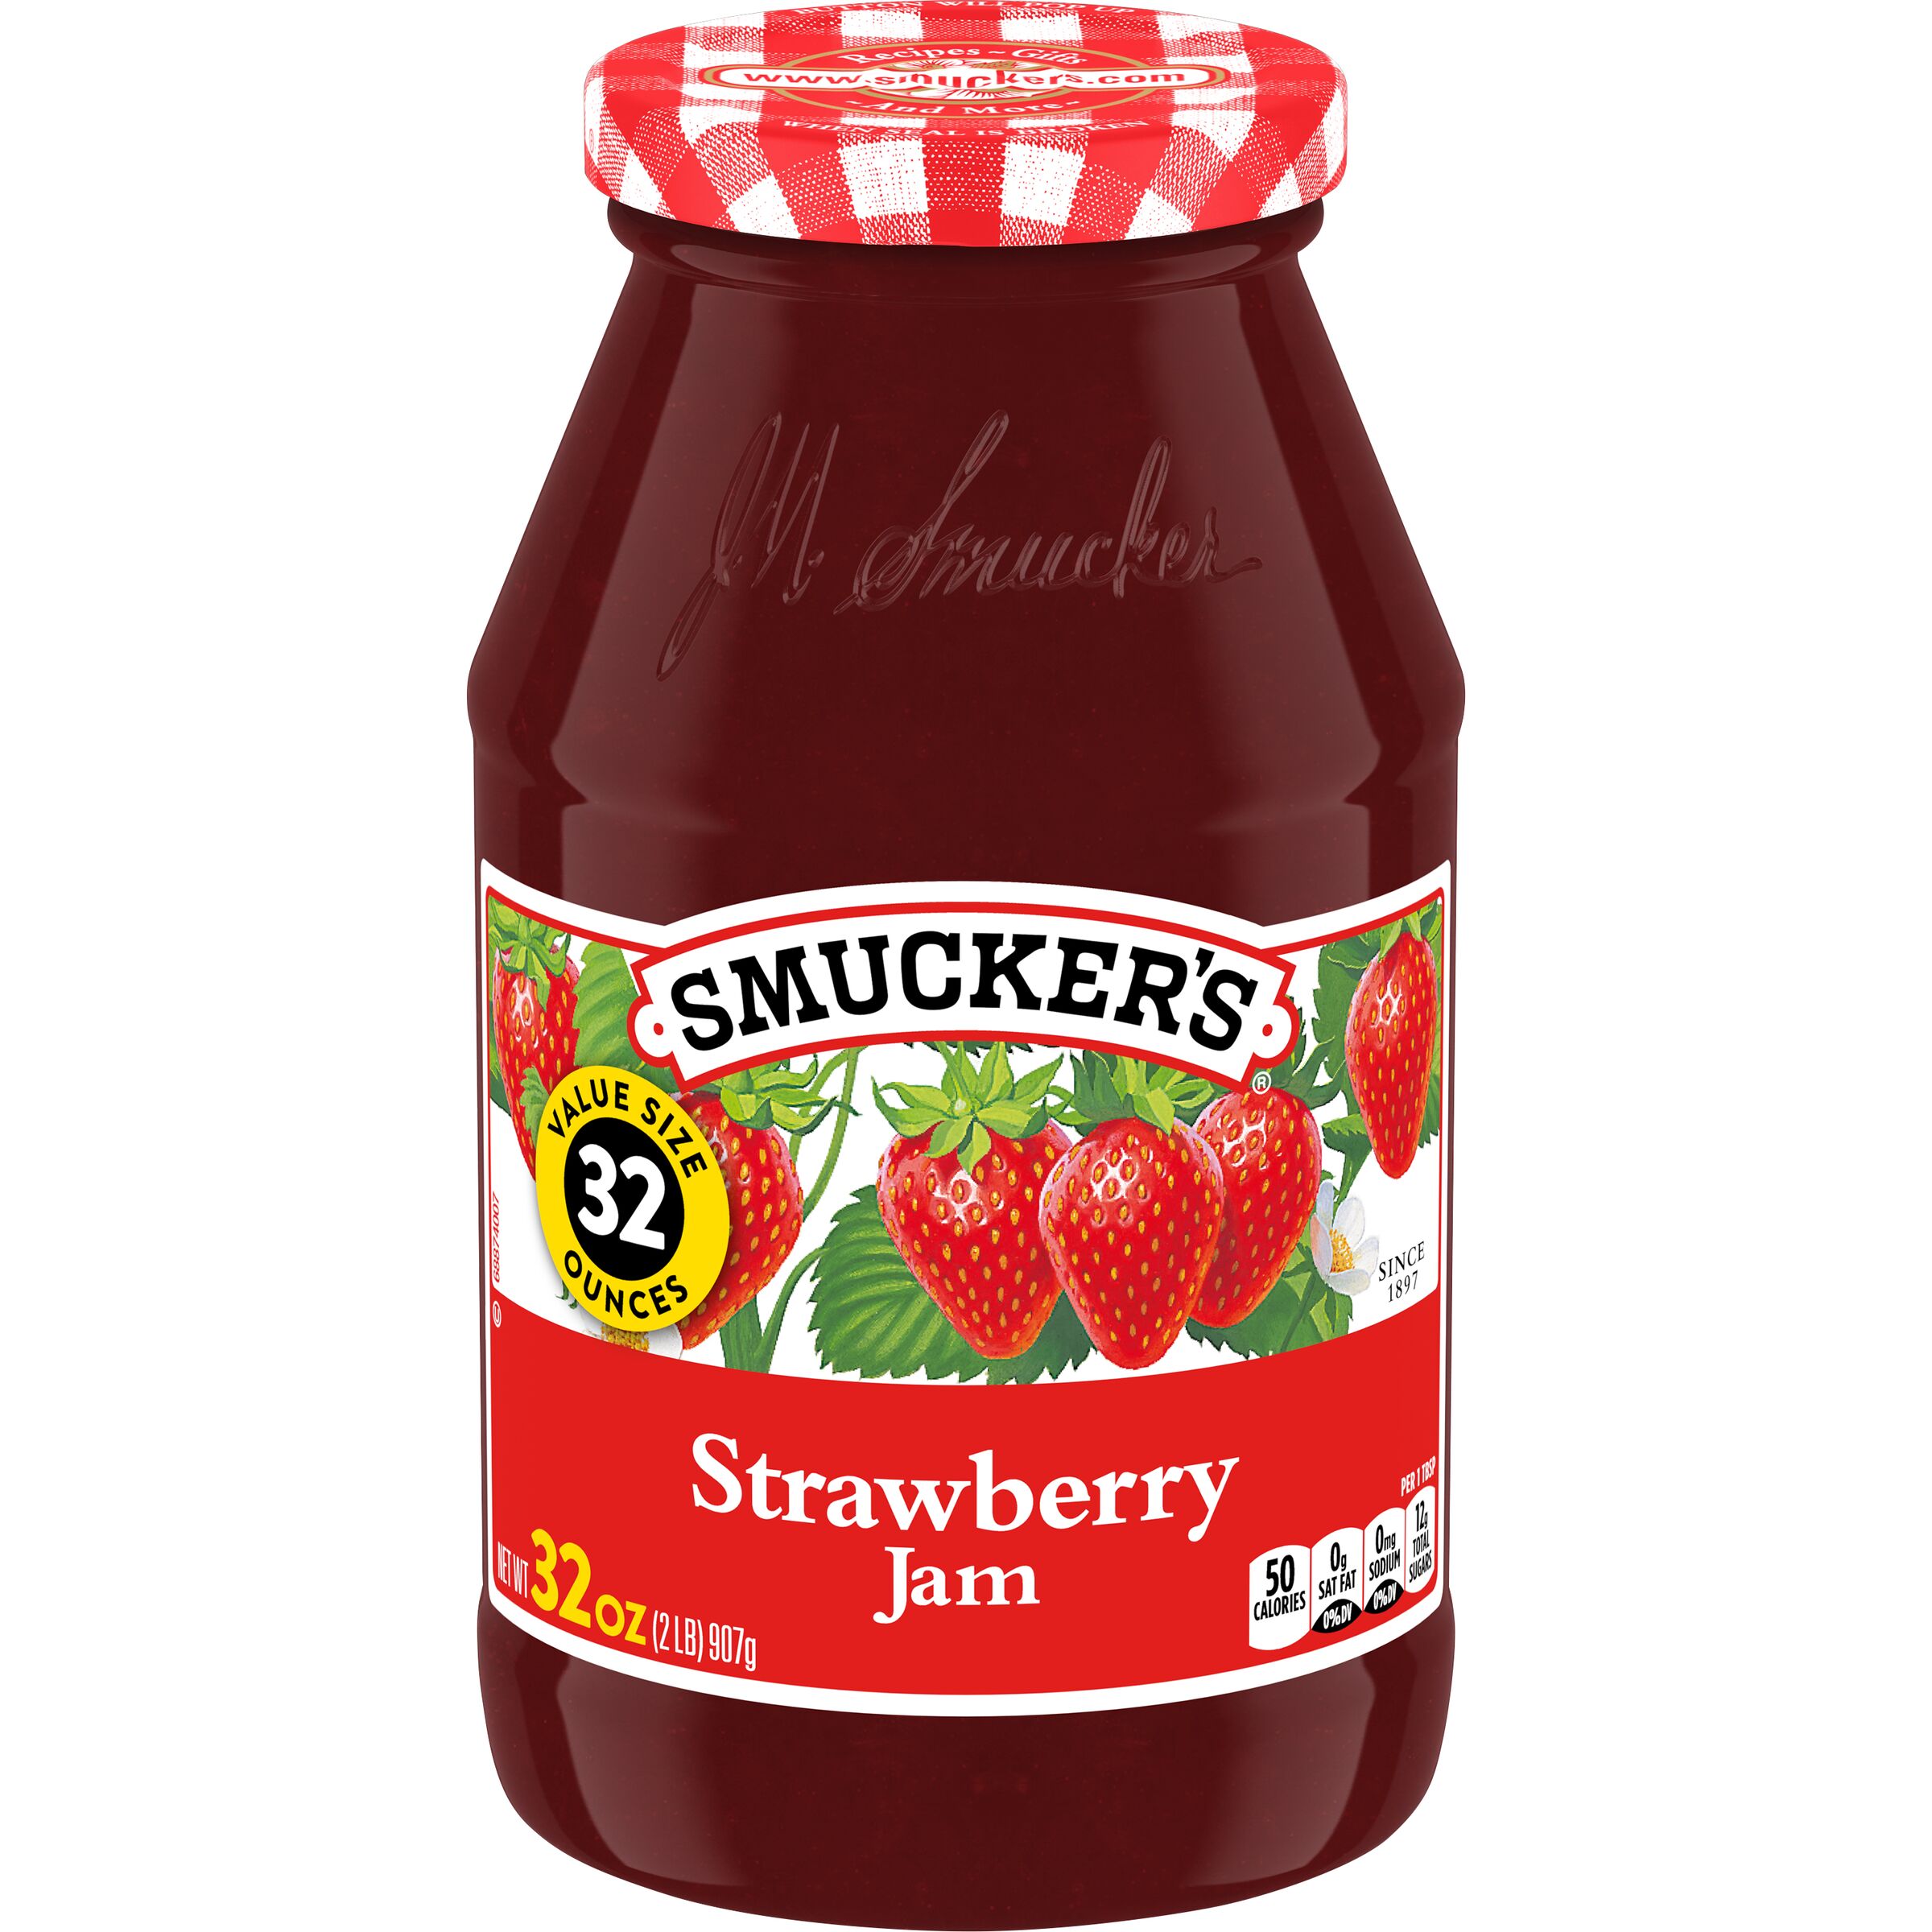 Smucker's Strawberry Jam, 32 Ounces - image 1 of 5